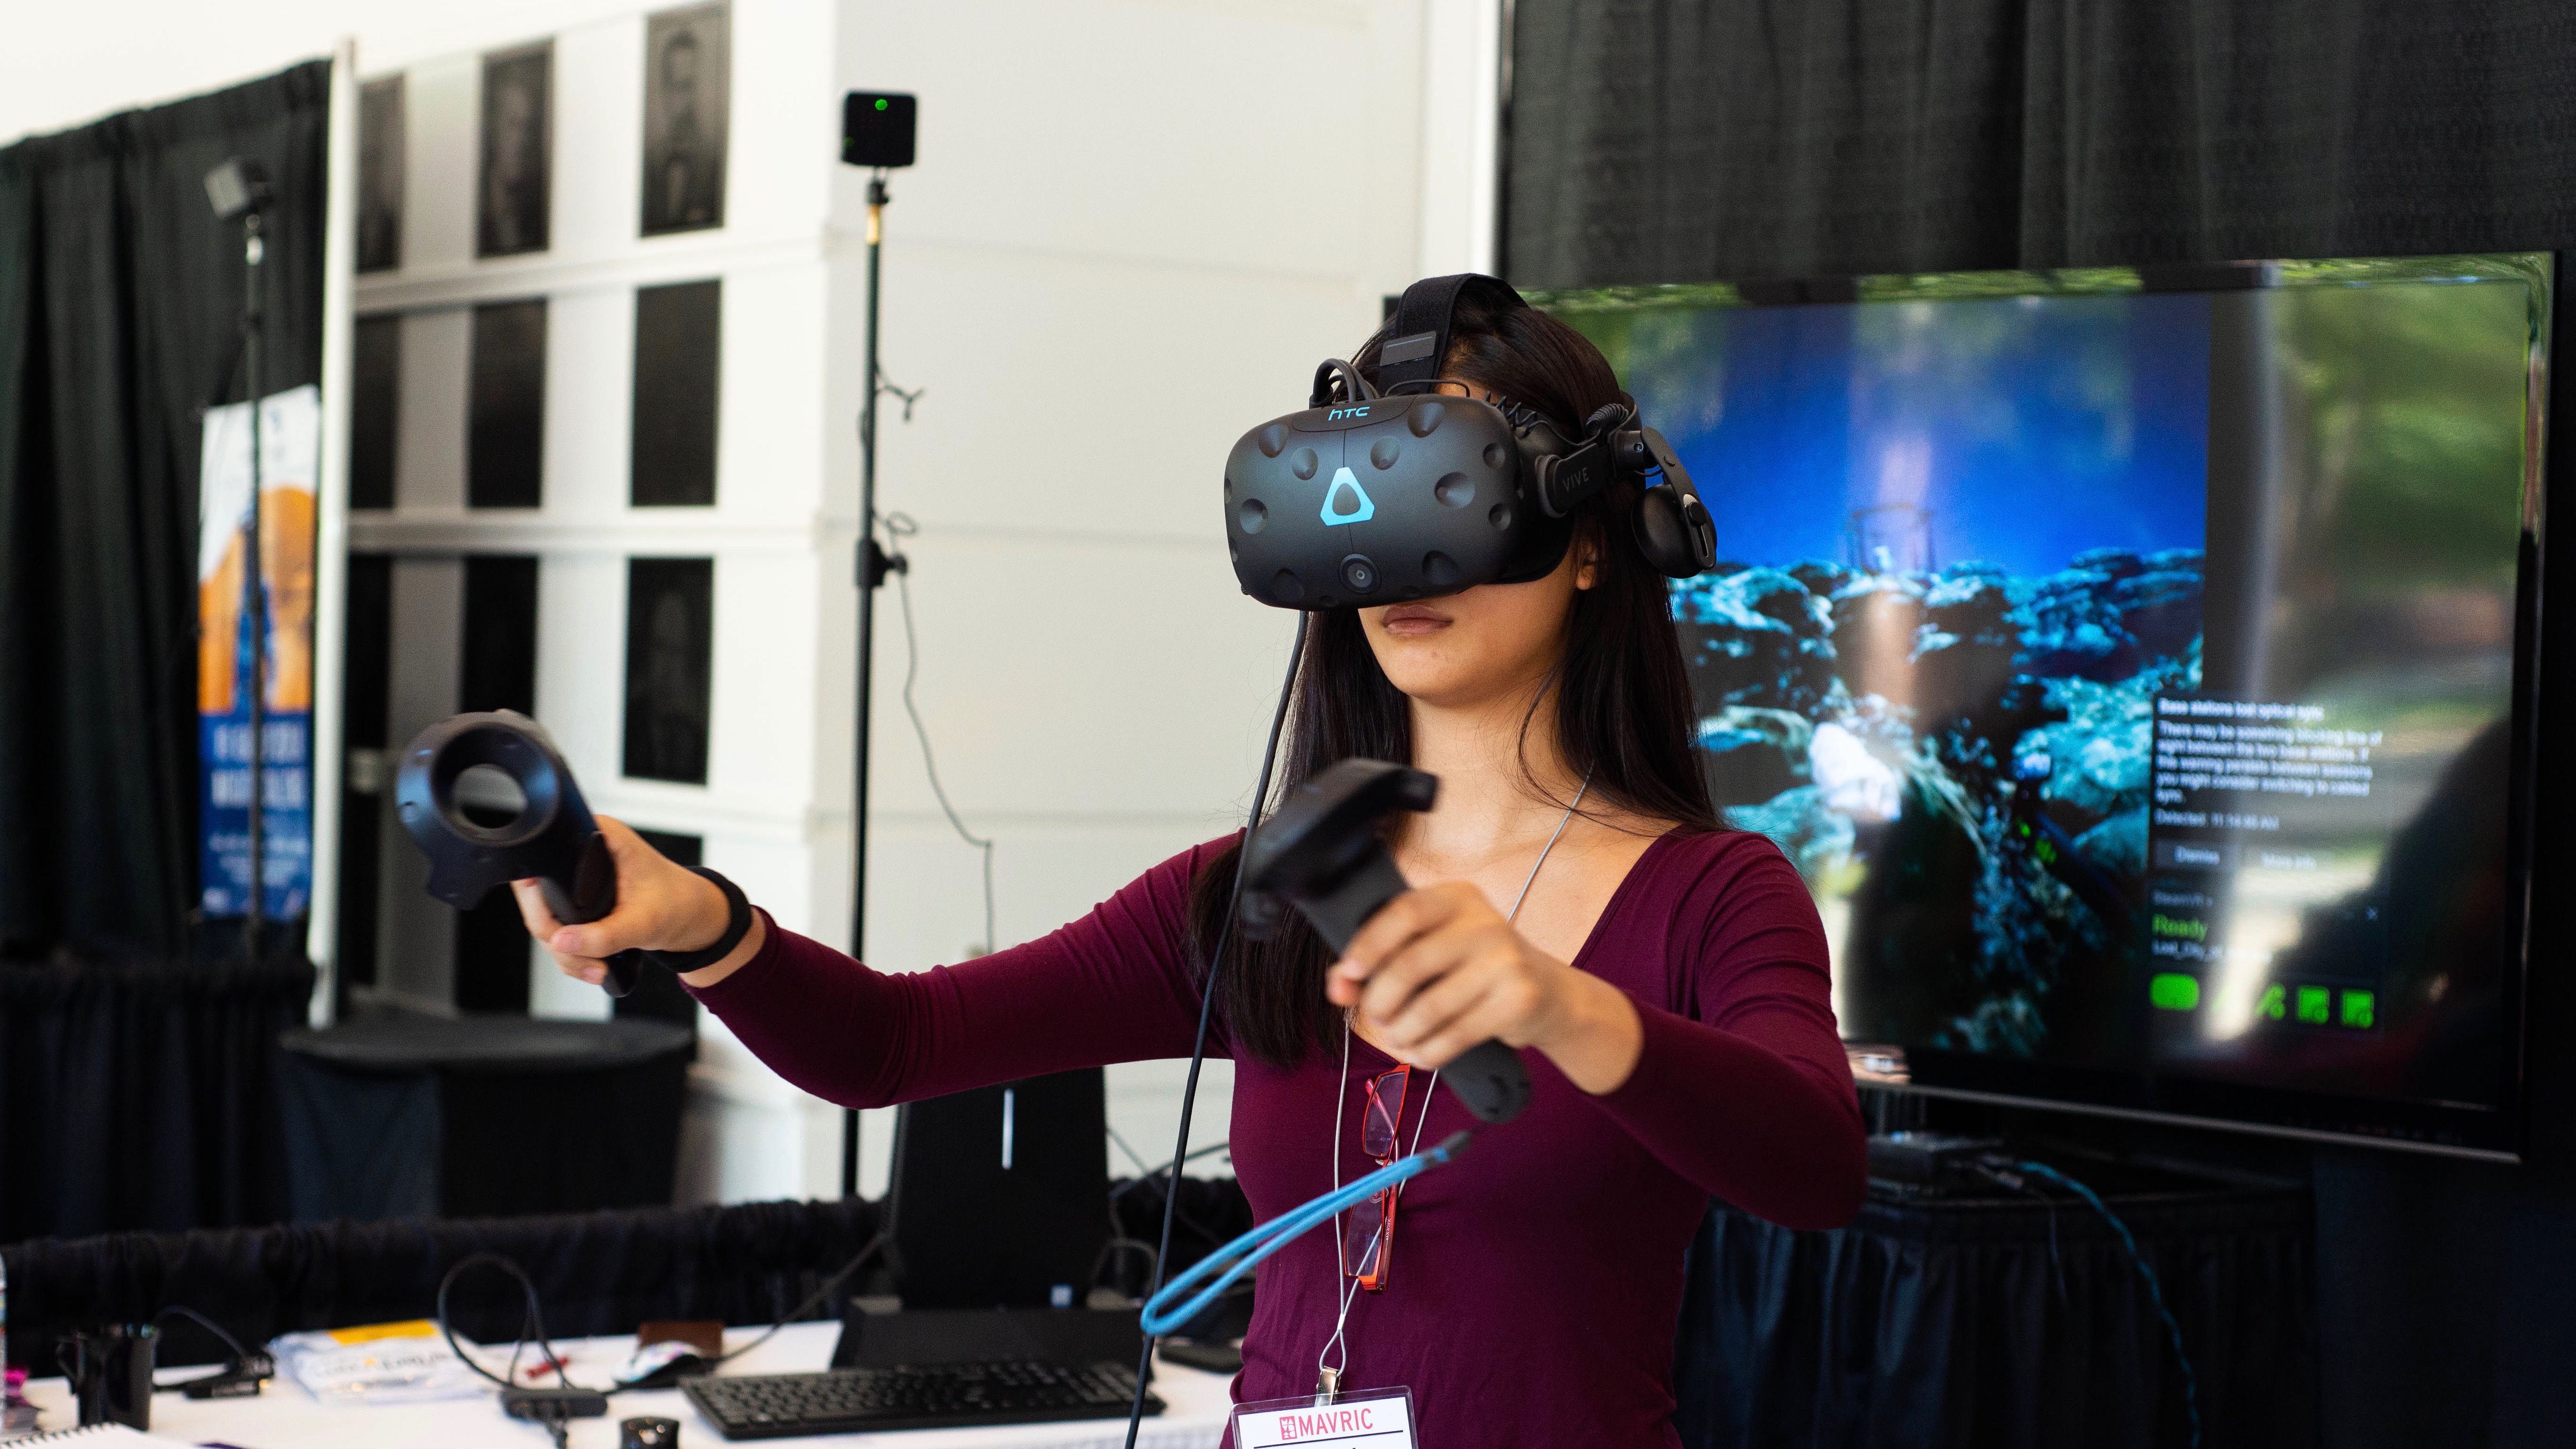 VR Demo at MAVRIC 2018 Conference